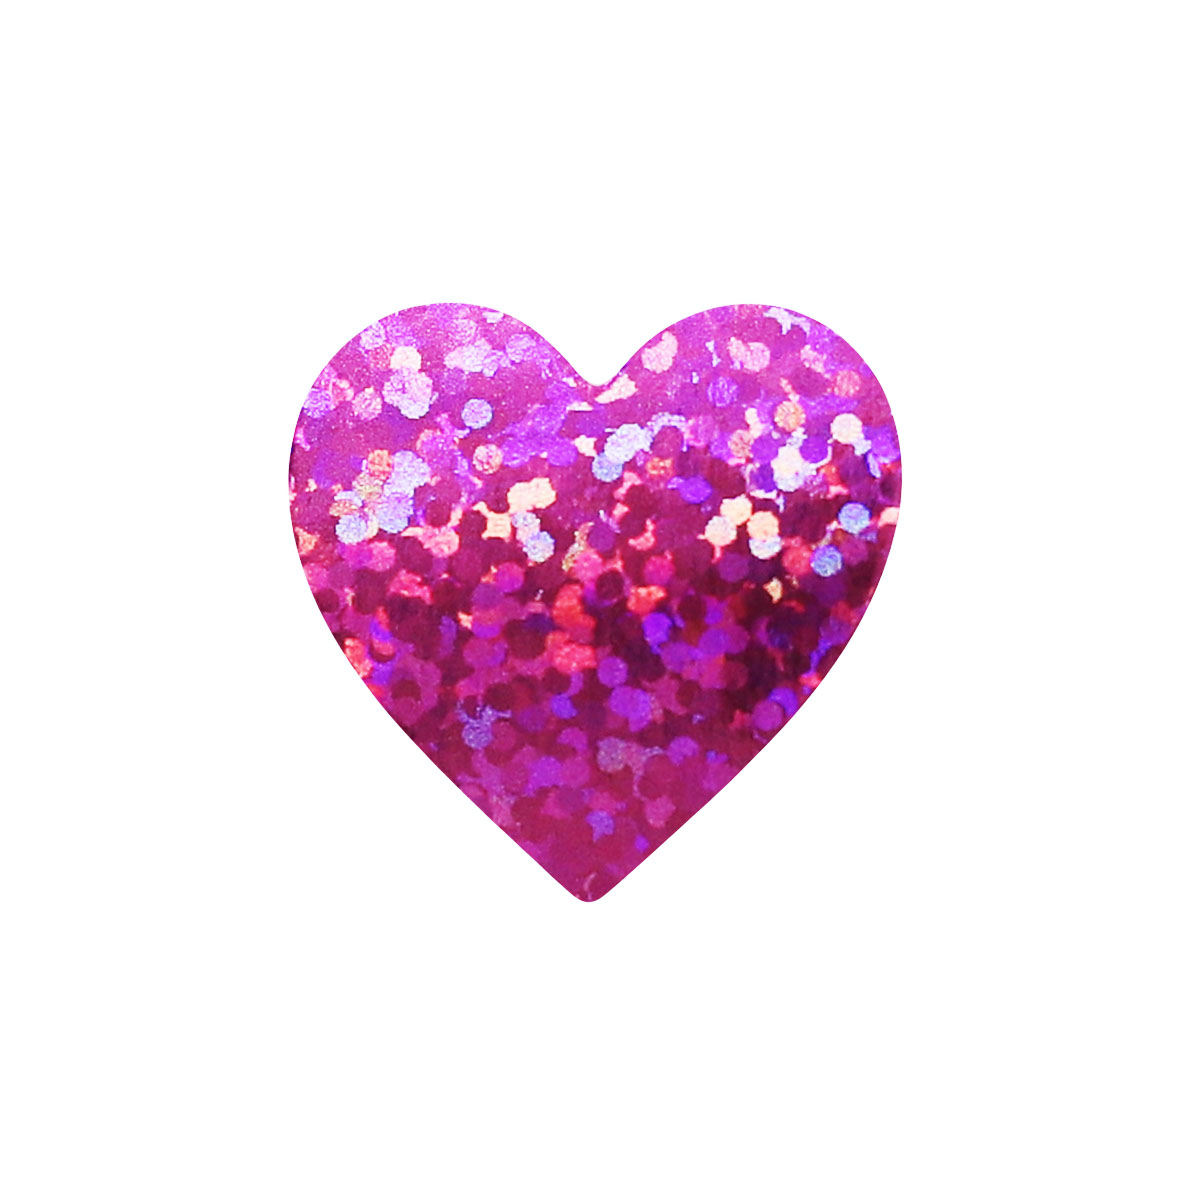 Love #Heart #Metallic #Pink #Silver #Sticker #Gradient #Metal